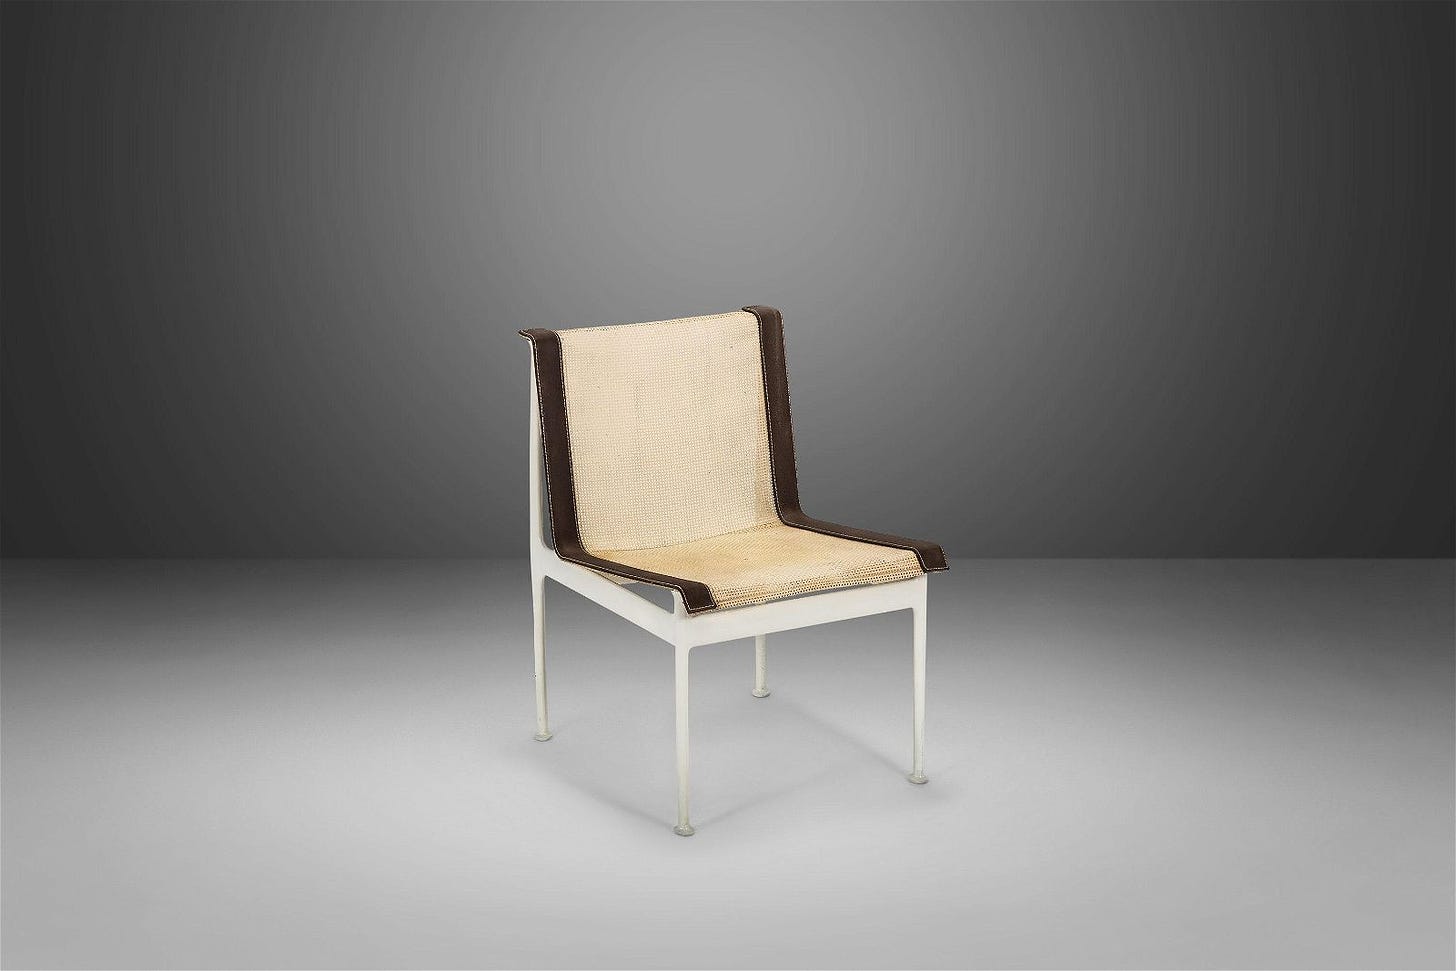 Armless Mid-Century Modern Patio Chair by Richard Schultz for Knoll USA c. 1966